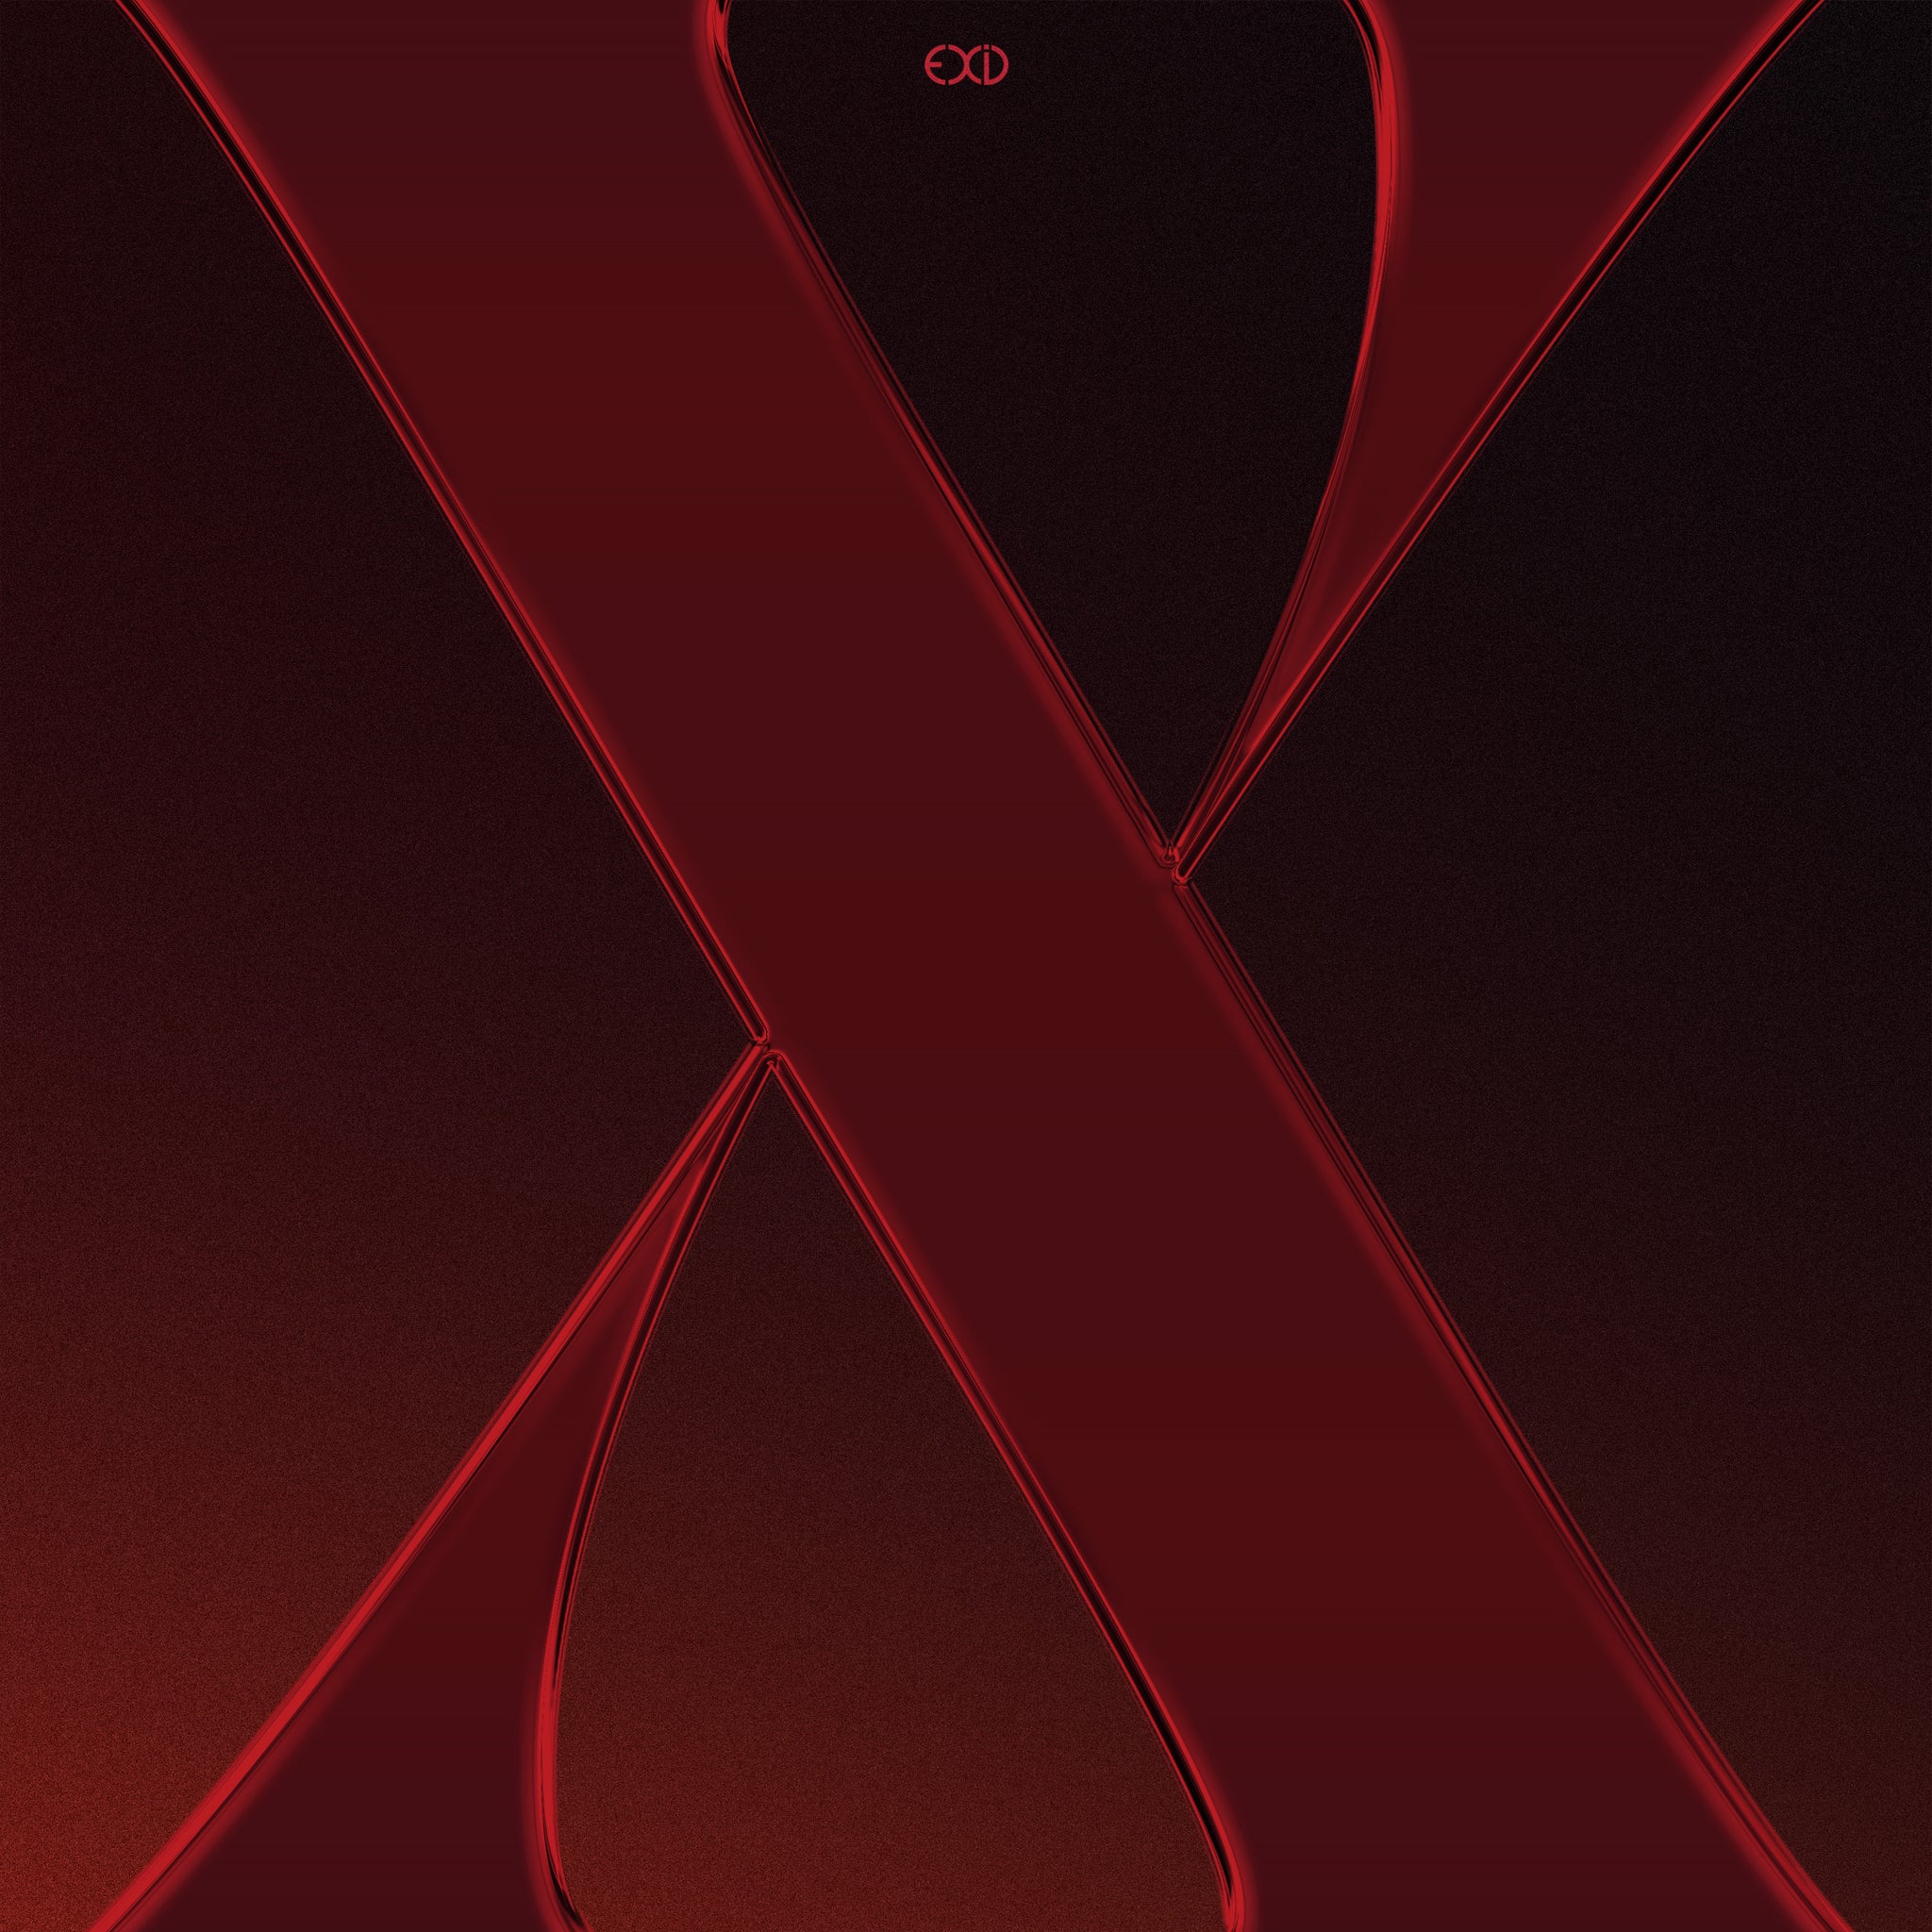 EXID 10TH ANNIVERSARY SINGLE ALBUM 'X' COVER